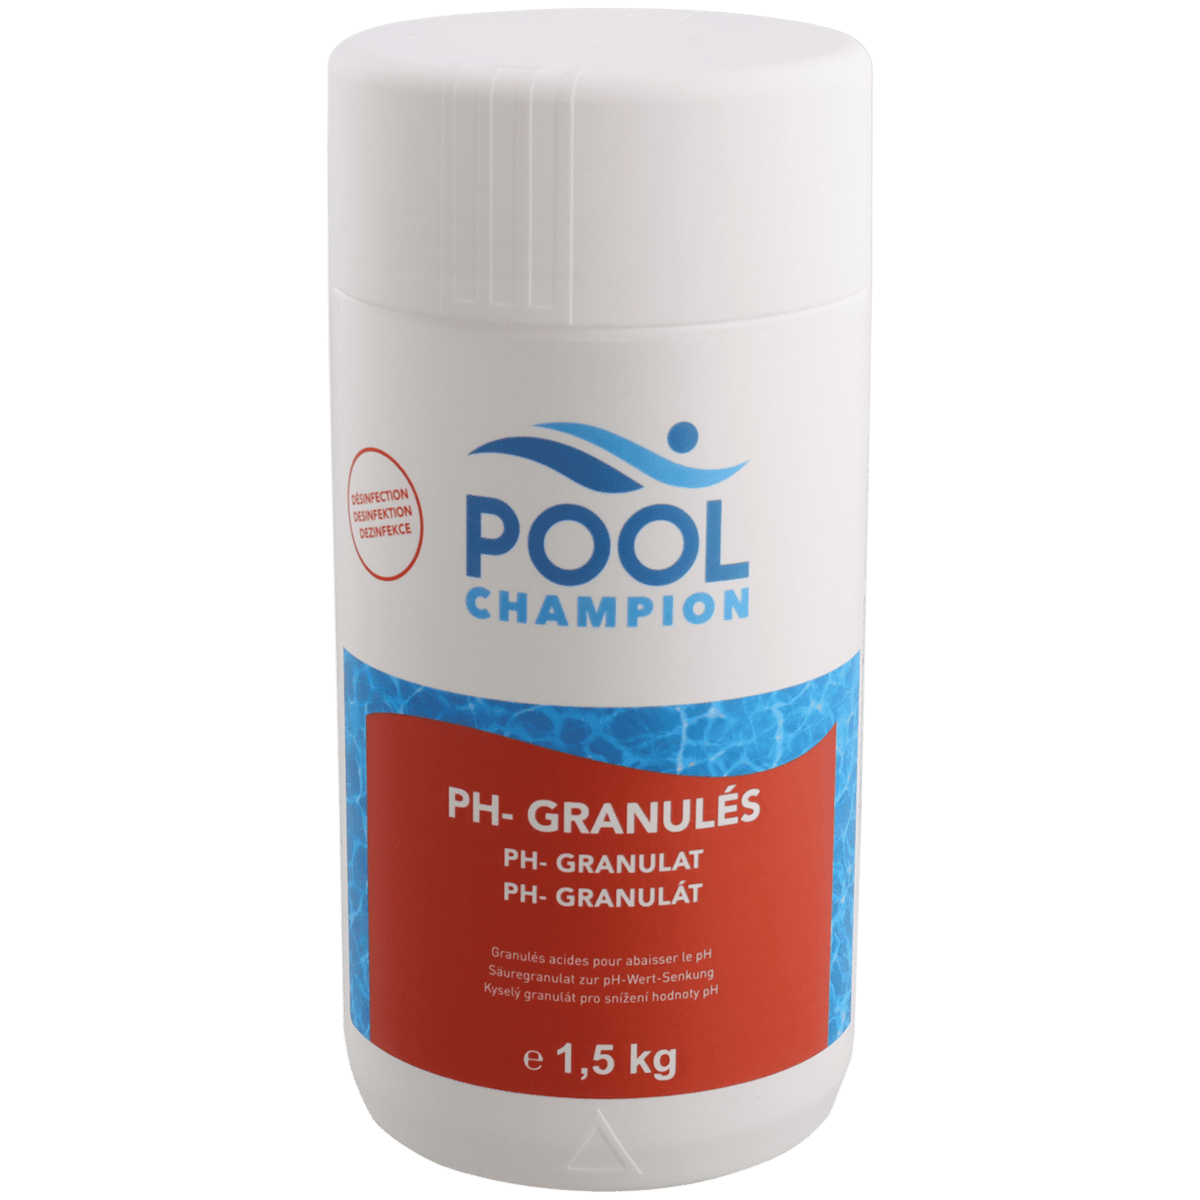 Granulés Pool Champion pH- Pool Champion